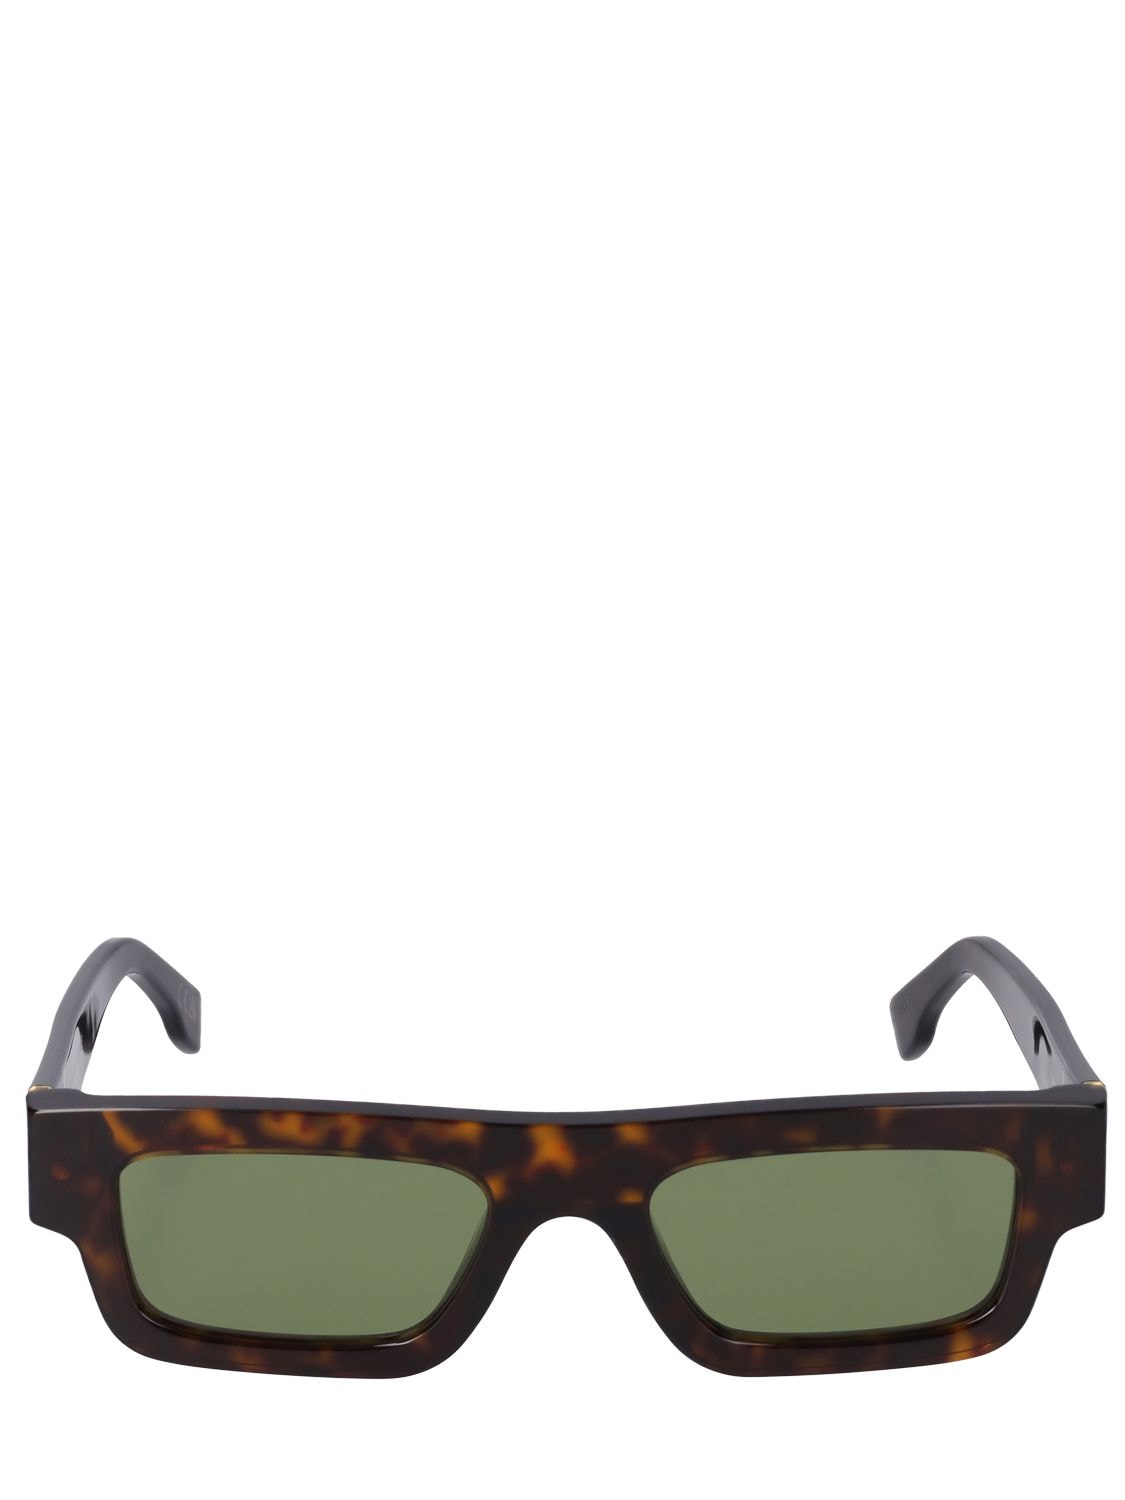 Image of Colpo 3627 Squared Acetate Sunglasses